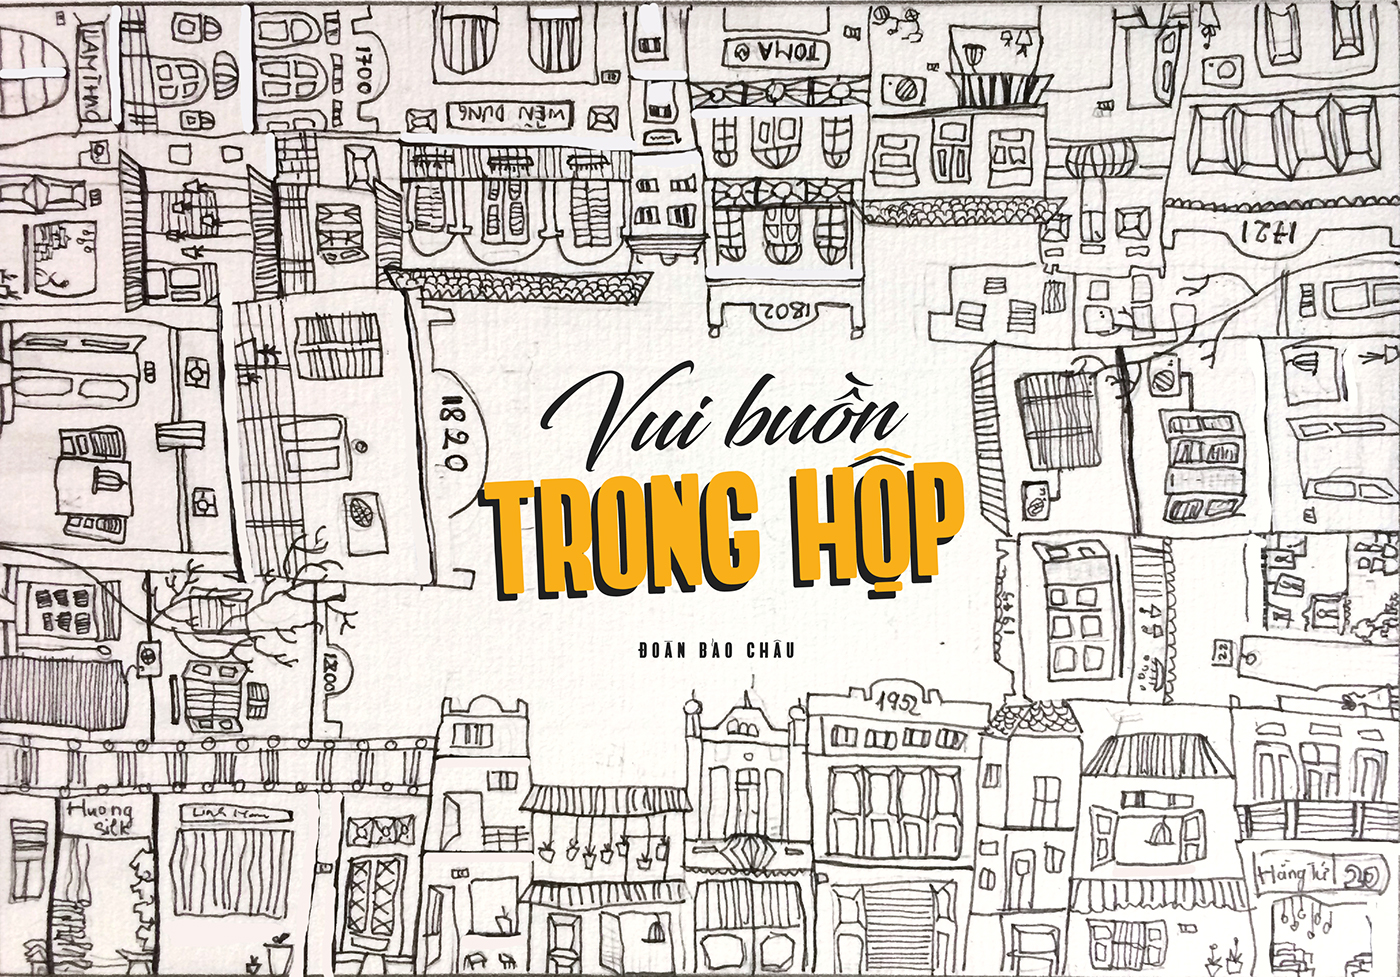 coverbook Illustrator hanoi hand drawn print colorfull design vietnamese bookmark free